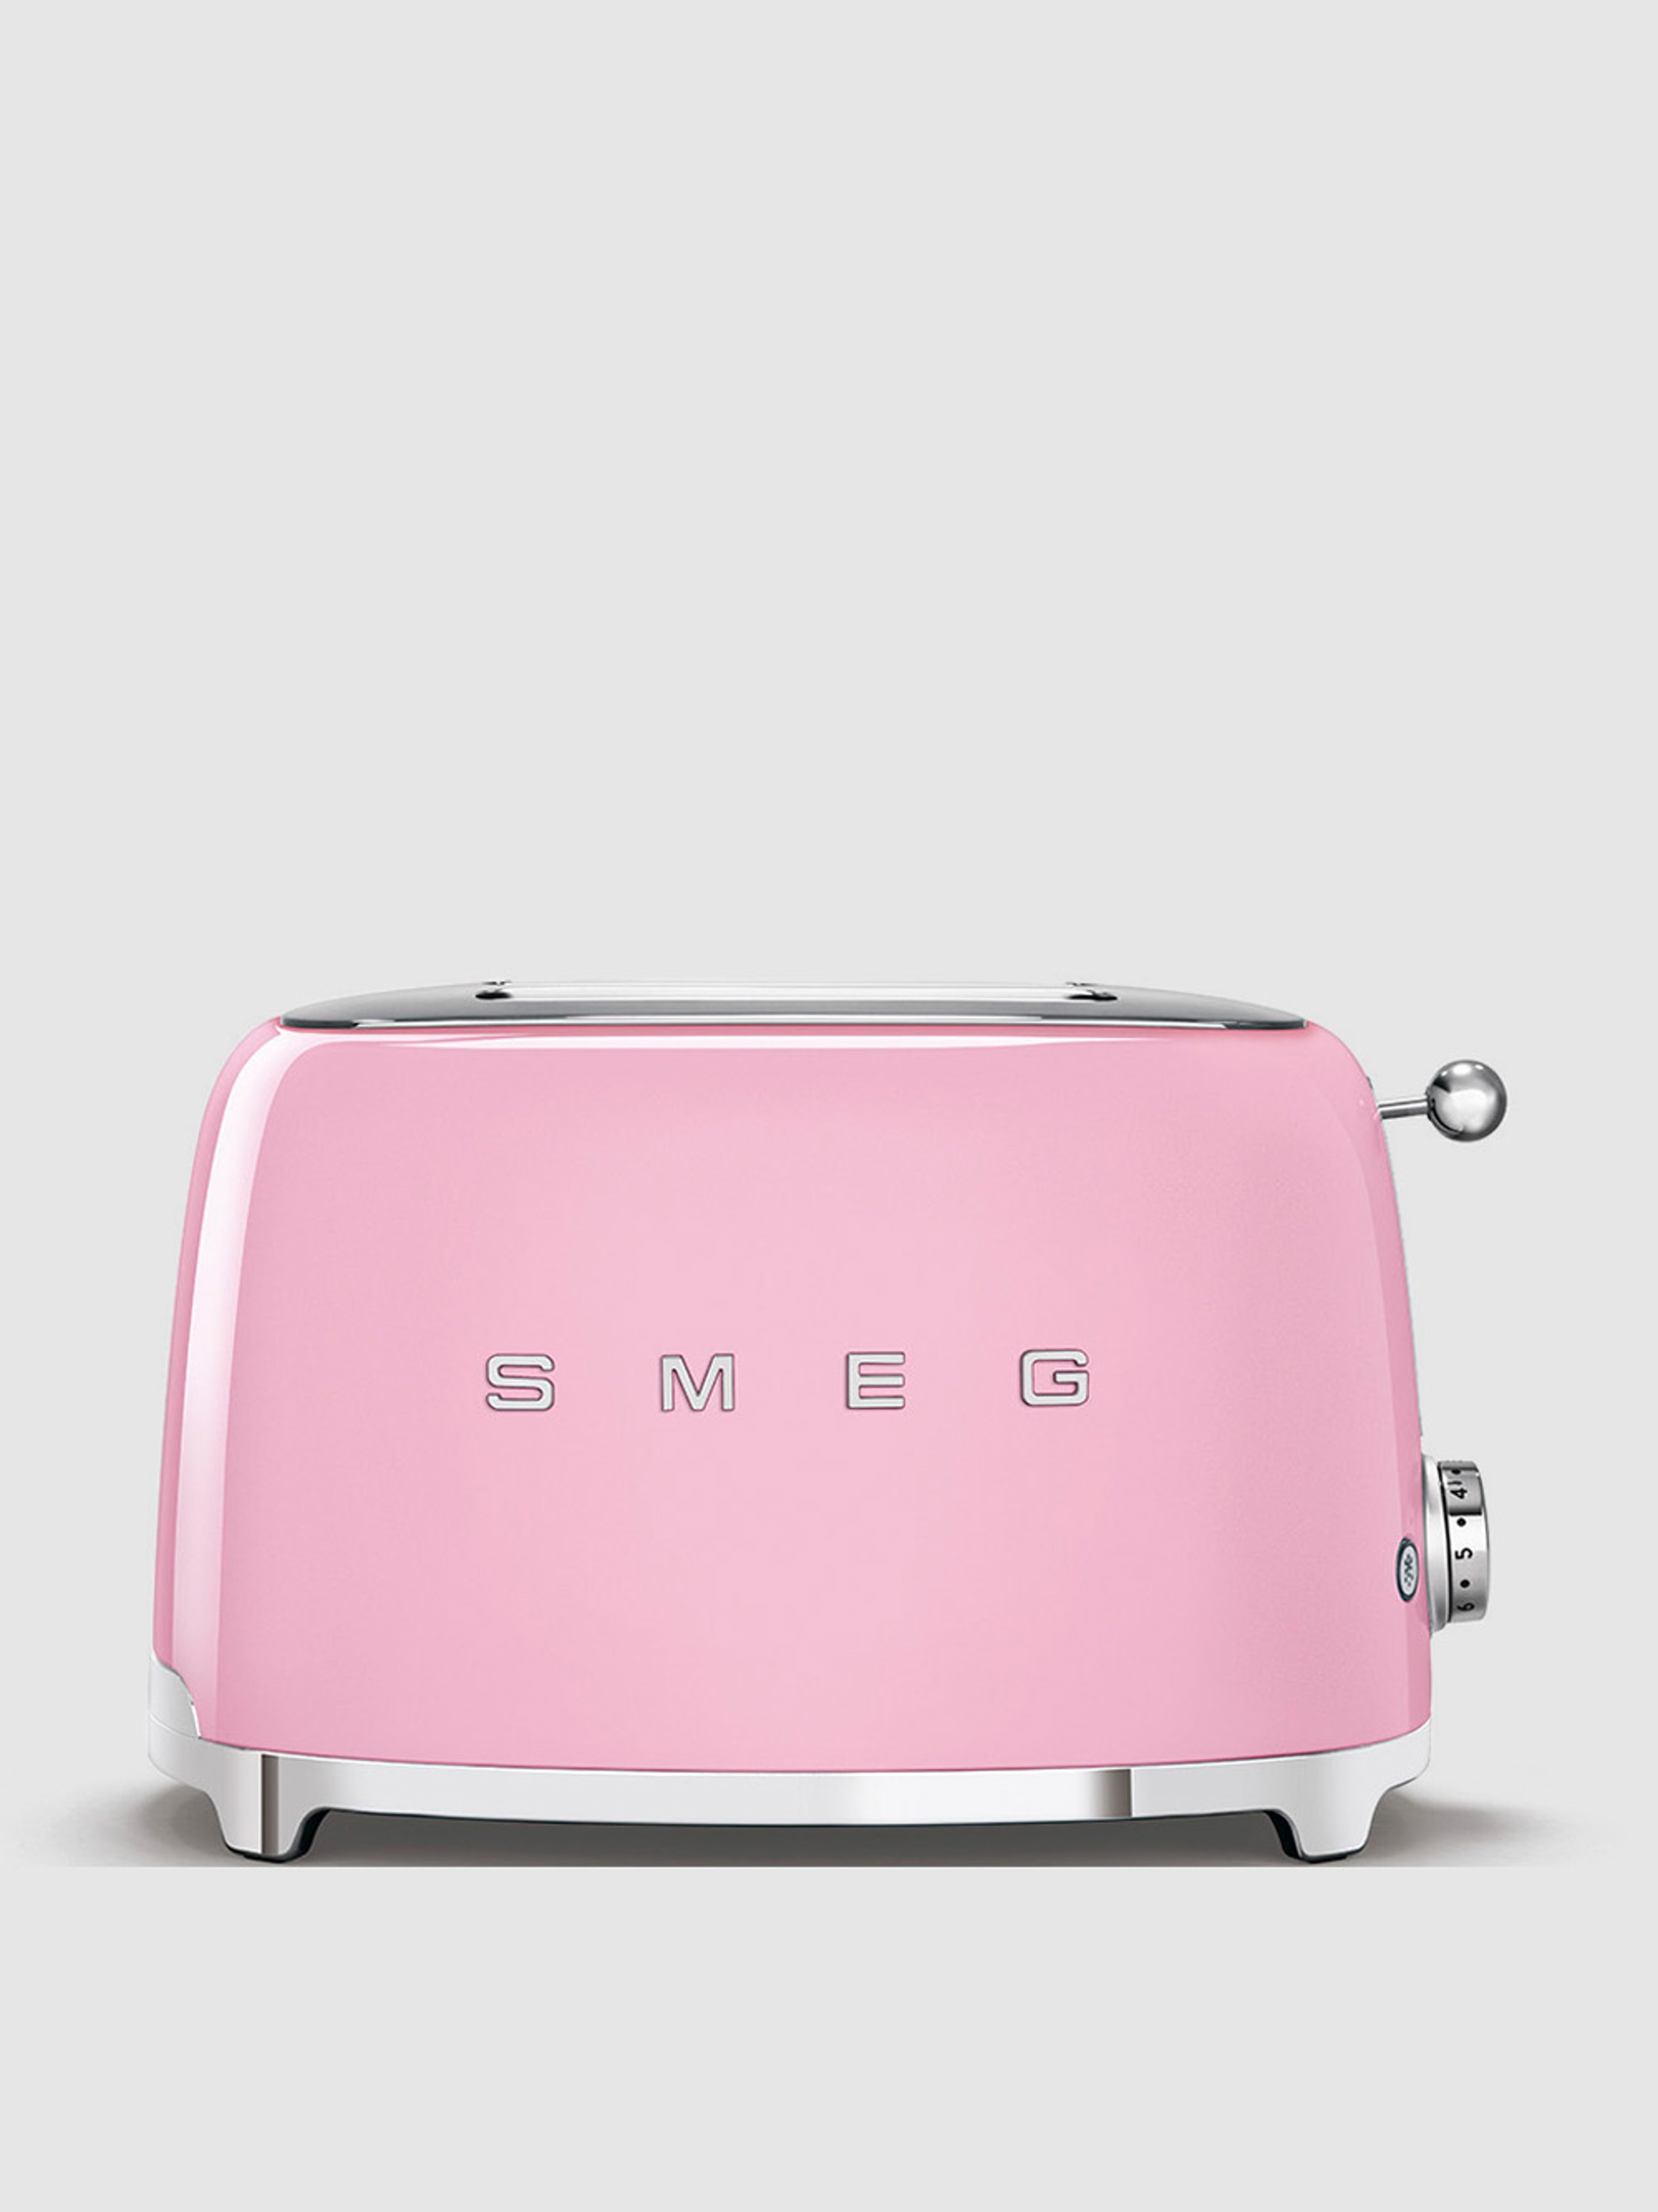 Smeg 2 Slice Toaster In Pink